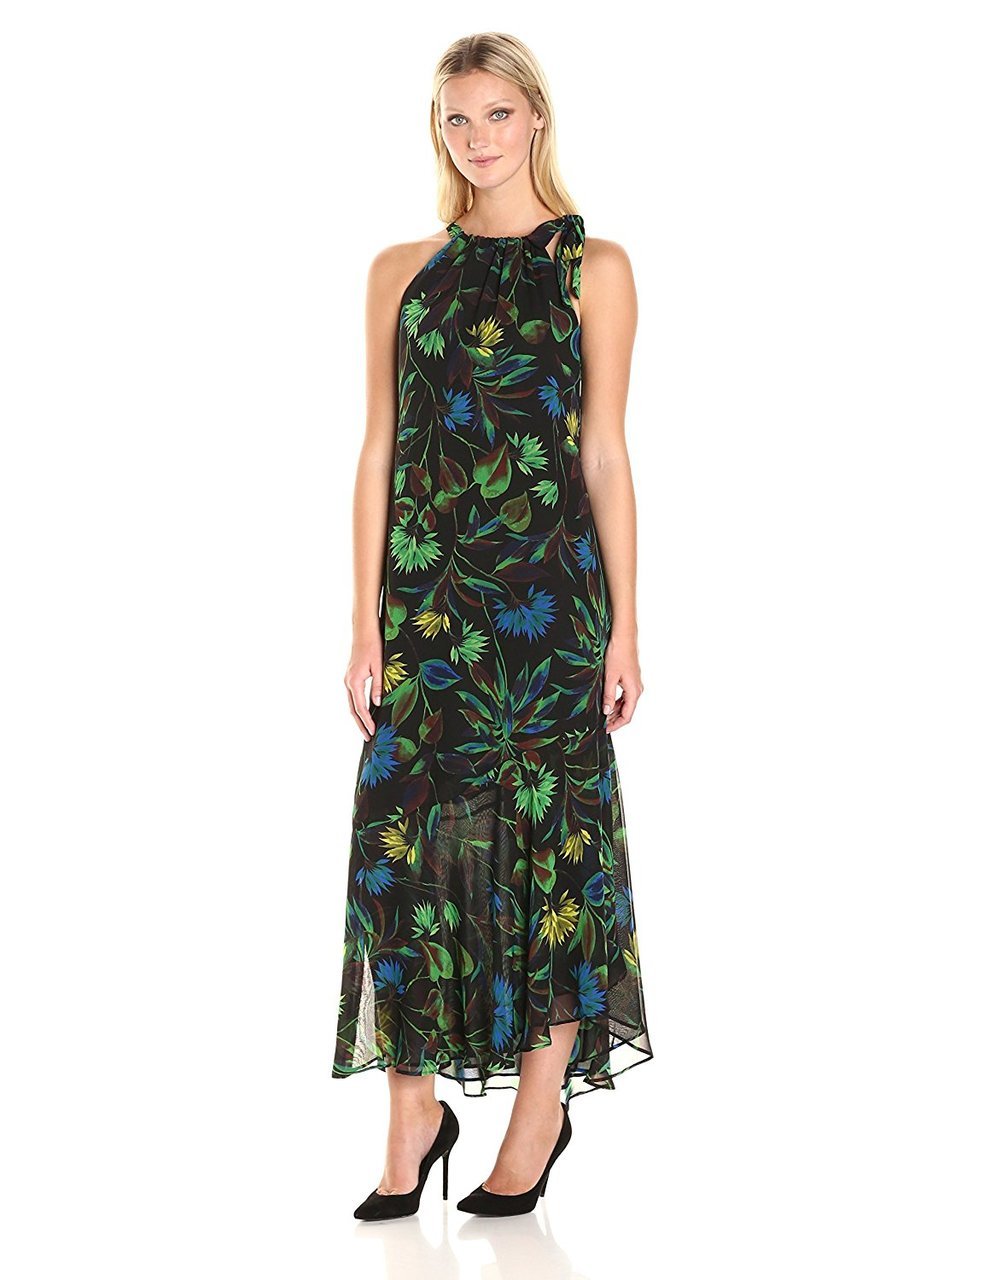 Taylor - Floral Printed Sheath Dress 8749M
